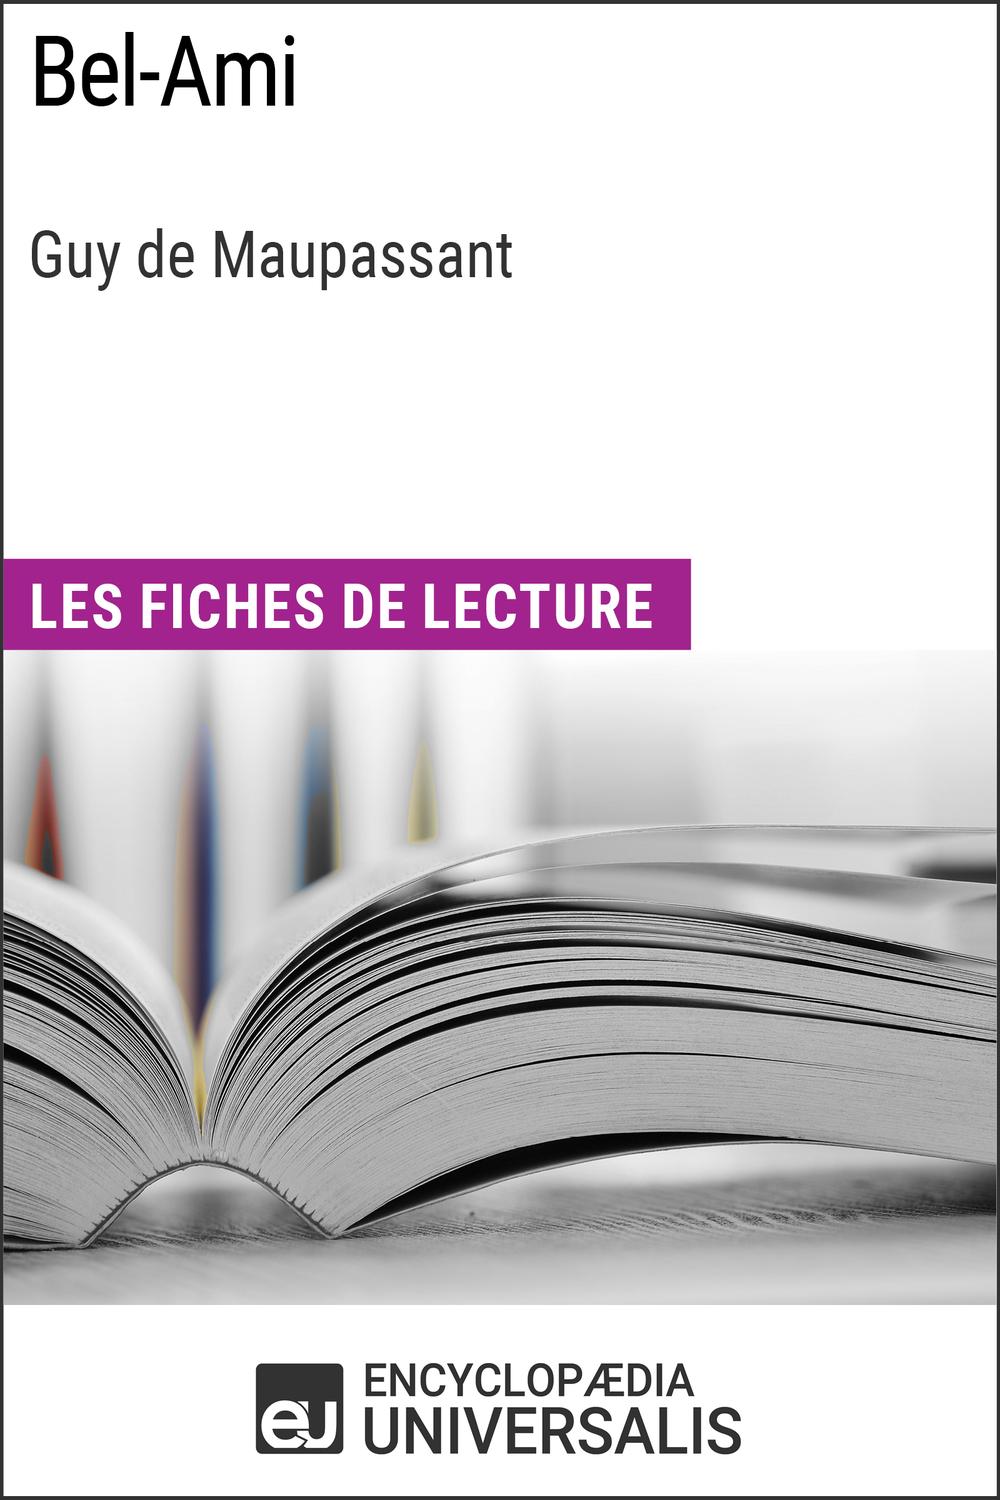 Bel-Ami de Guy de Maupassant - Encyclopaedia Universalis